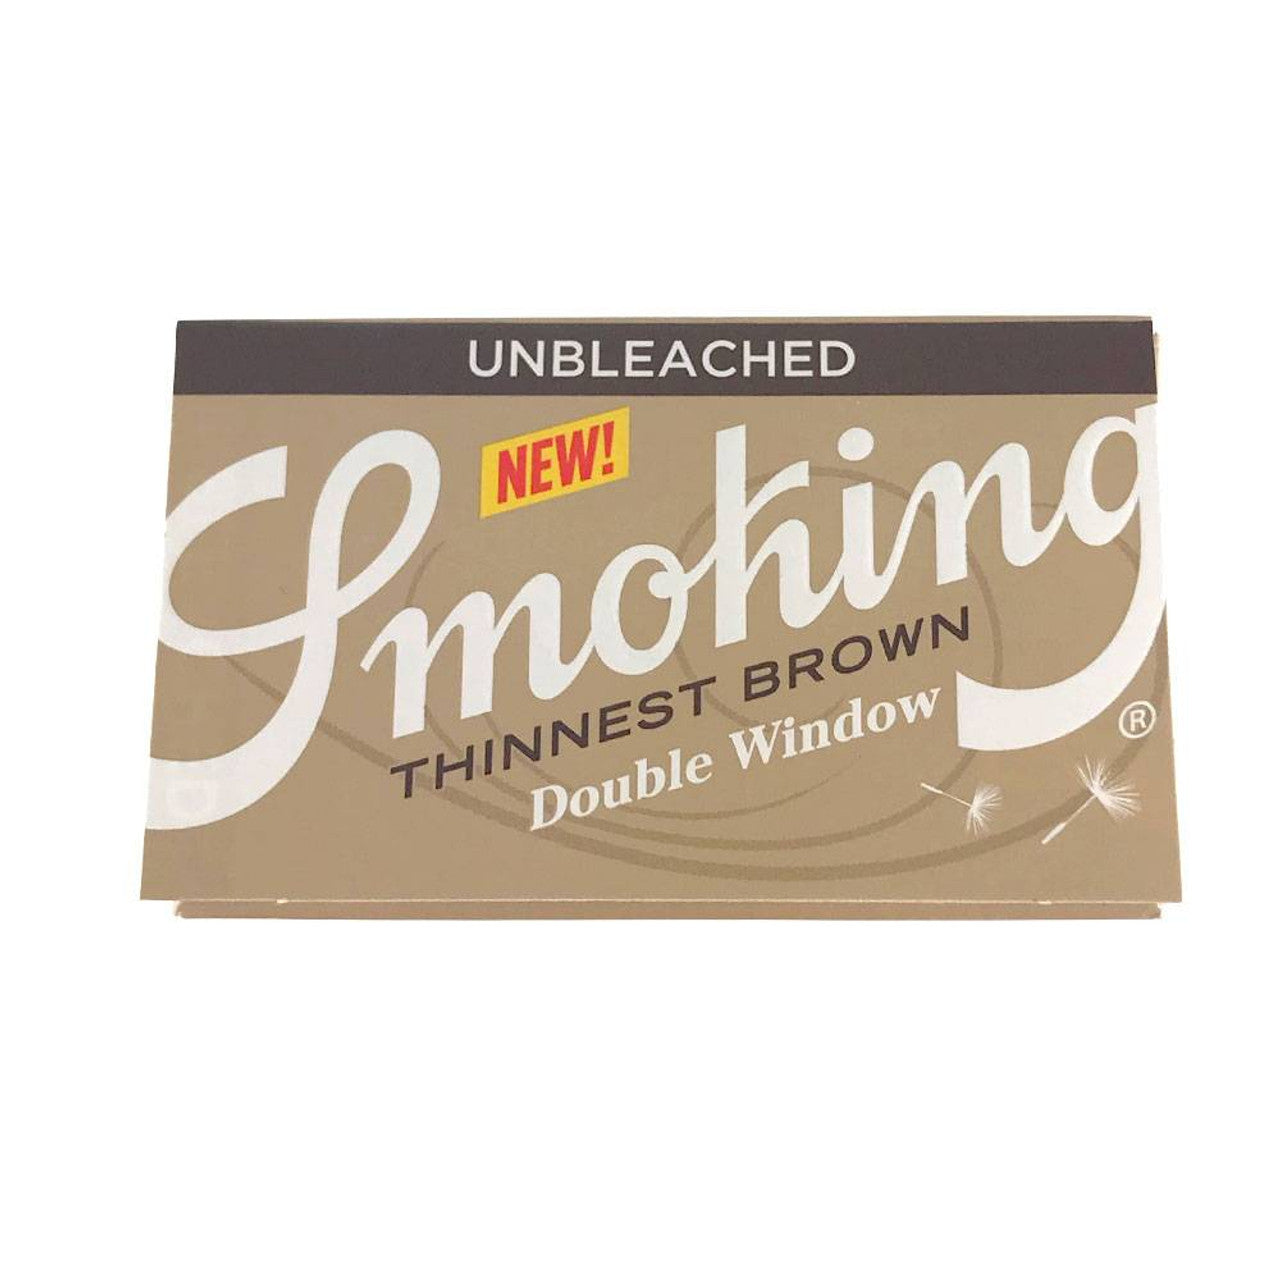 Smoking Thinnest Brown Single Wide